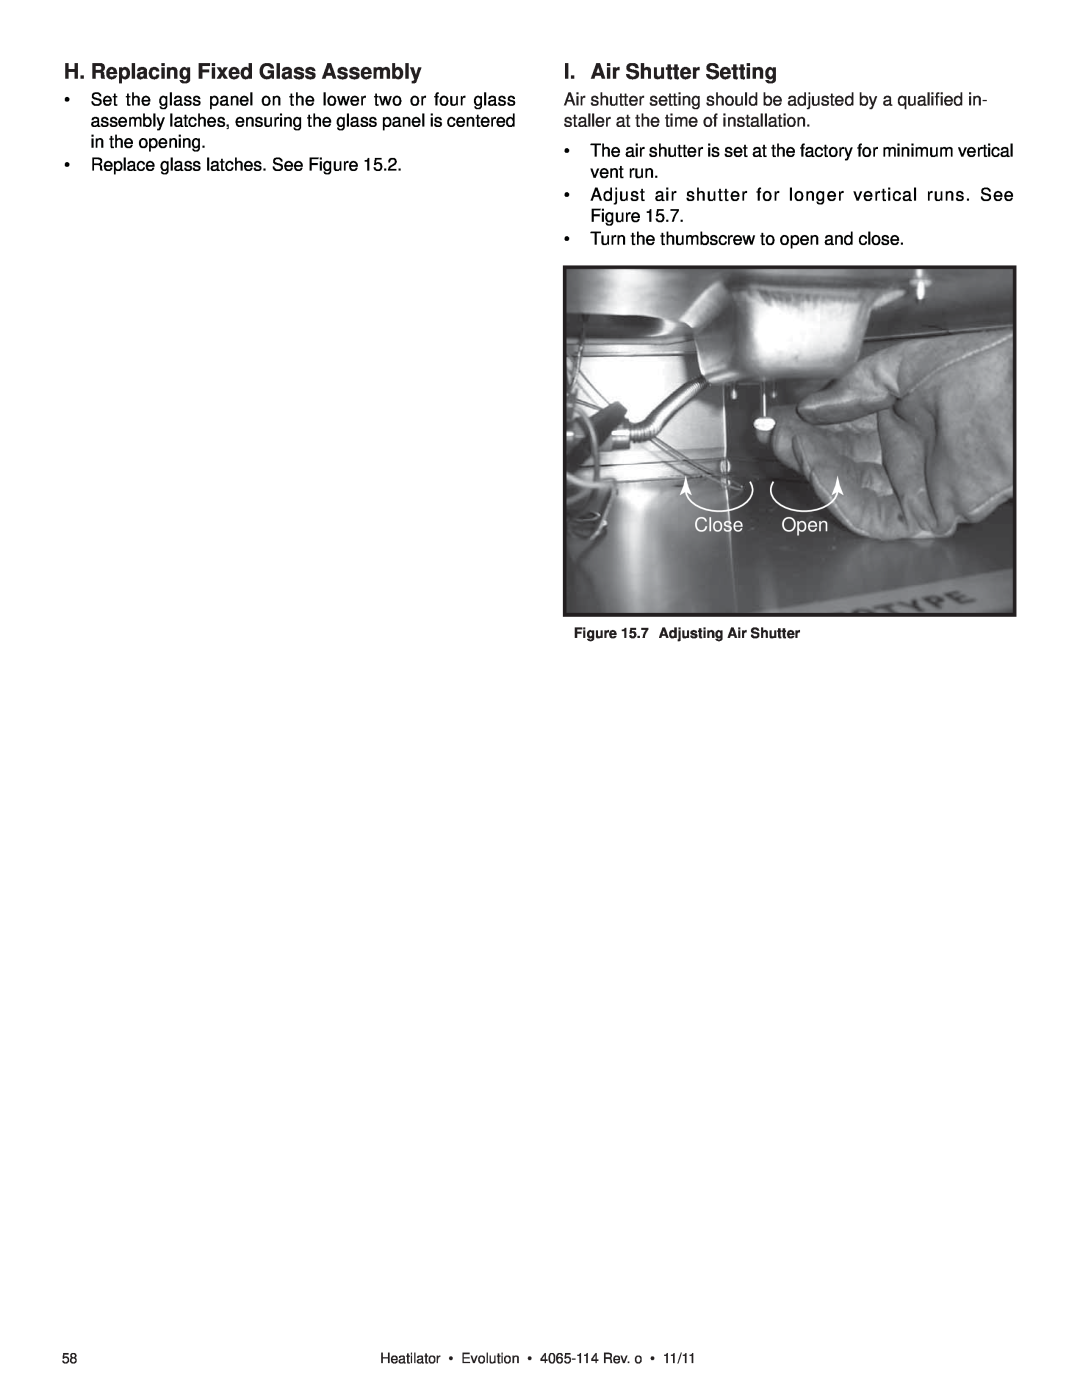 Heatiator NEVO4236I NEVO3630I owner manual H. Replacing Fixed Glass Assembly, I. Air Shutter Setting, Close Open 